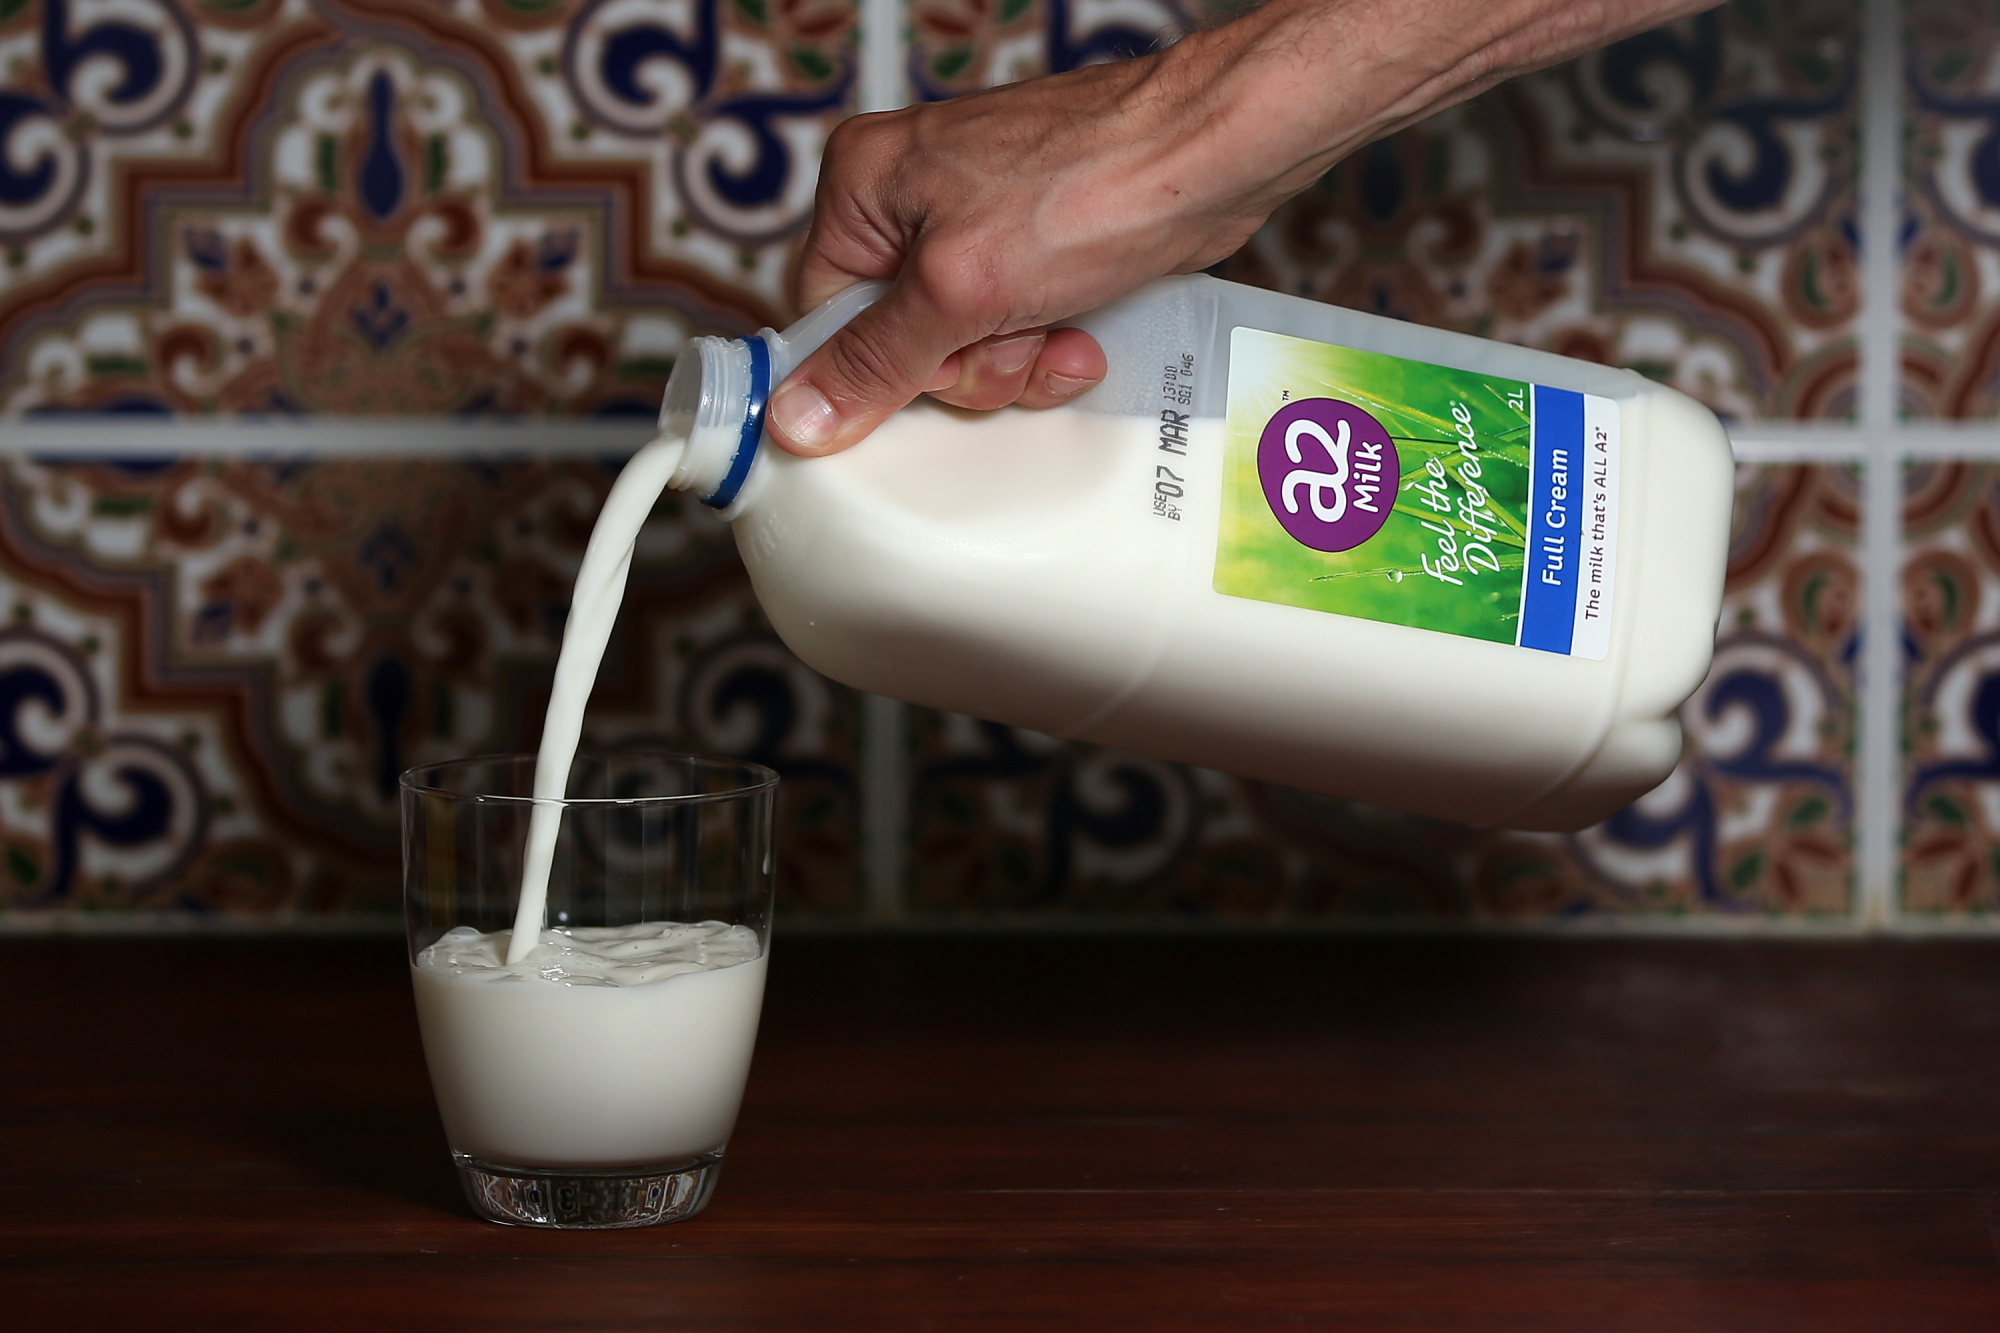 a2 Milk